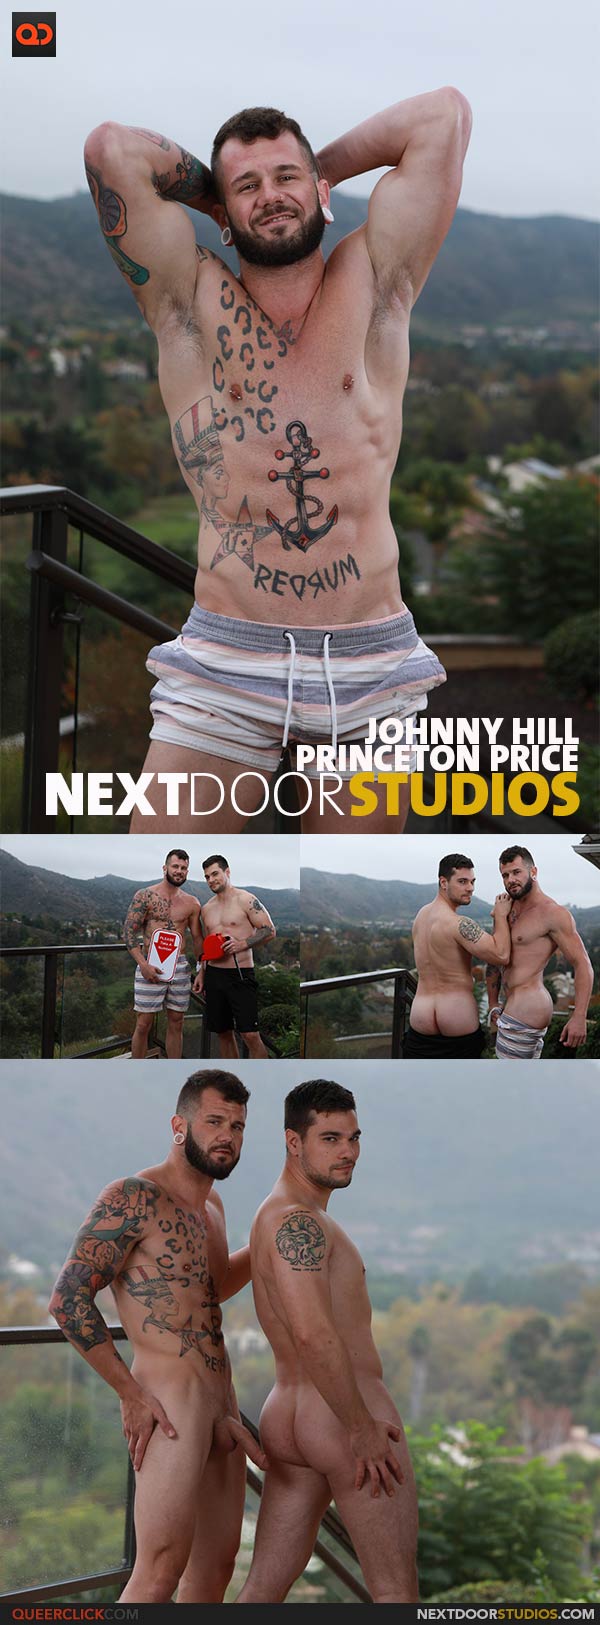 NextDoorStudios: Johnny Hill and Princeton Price